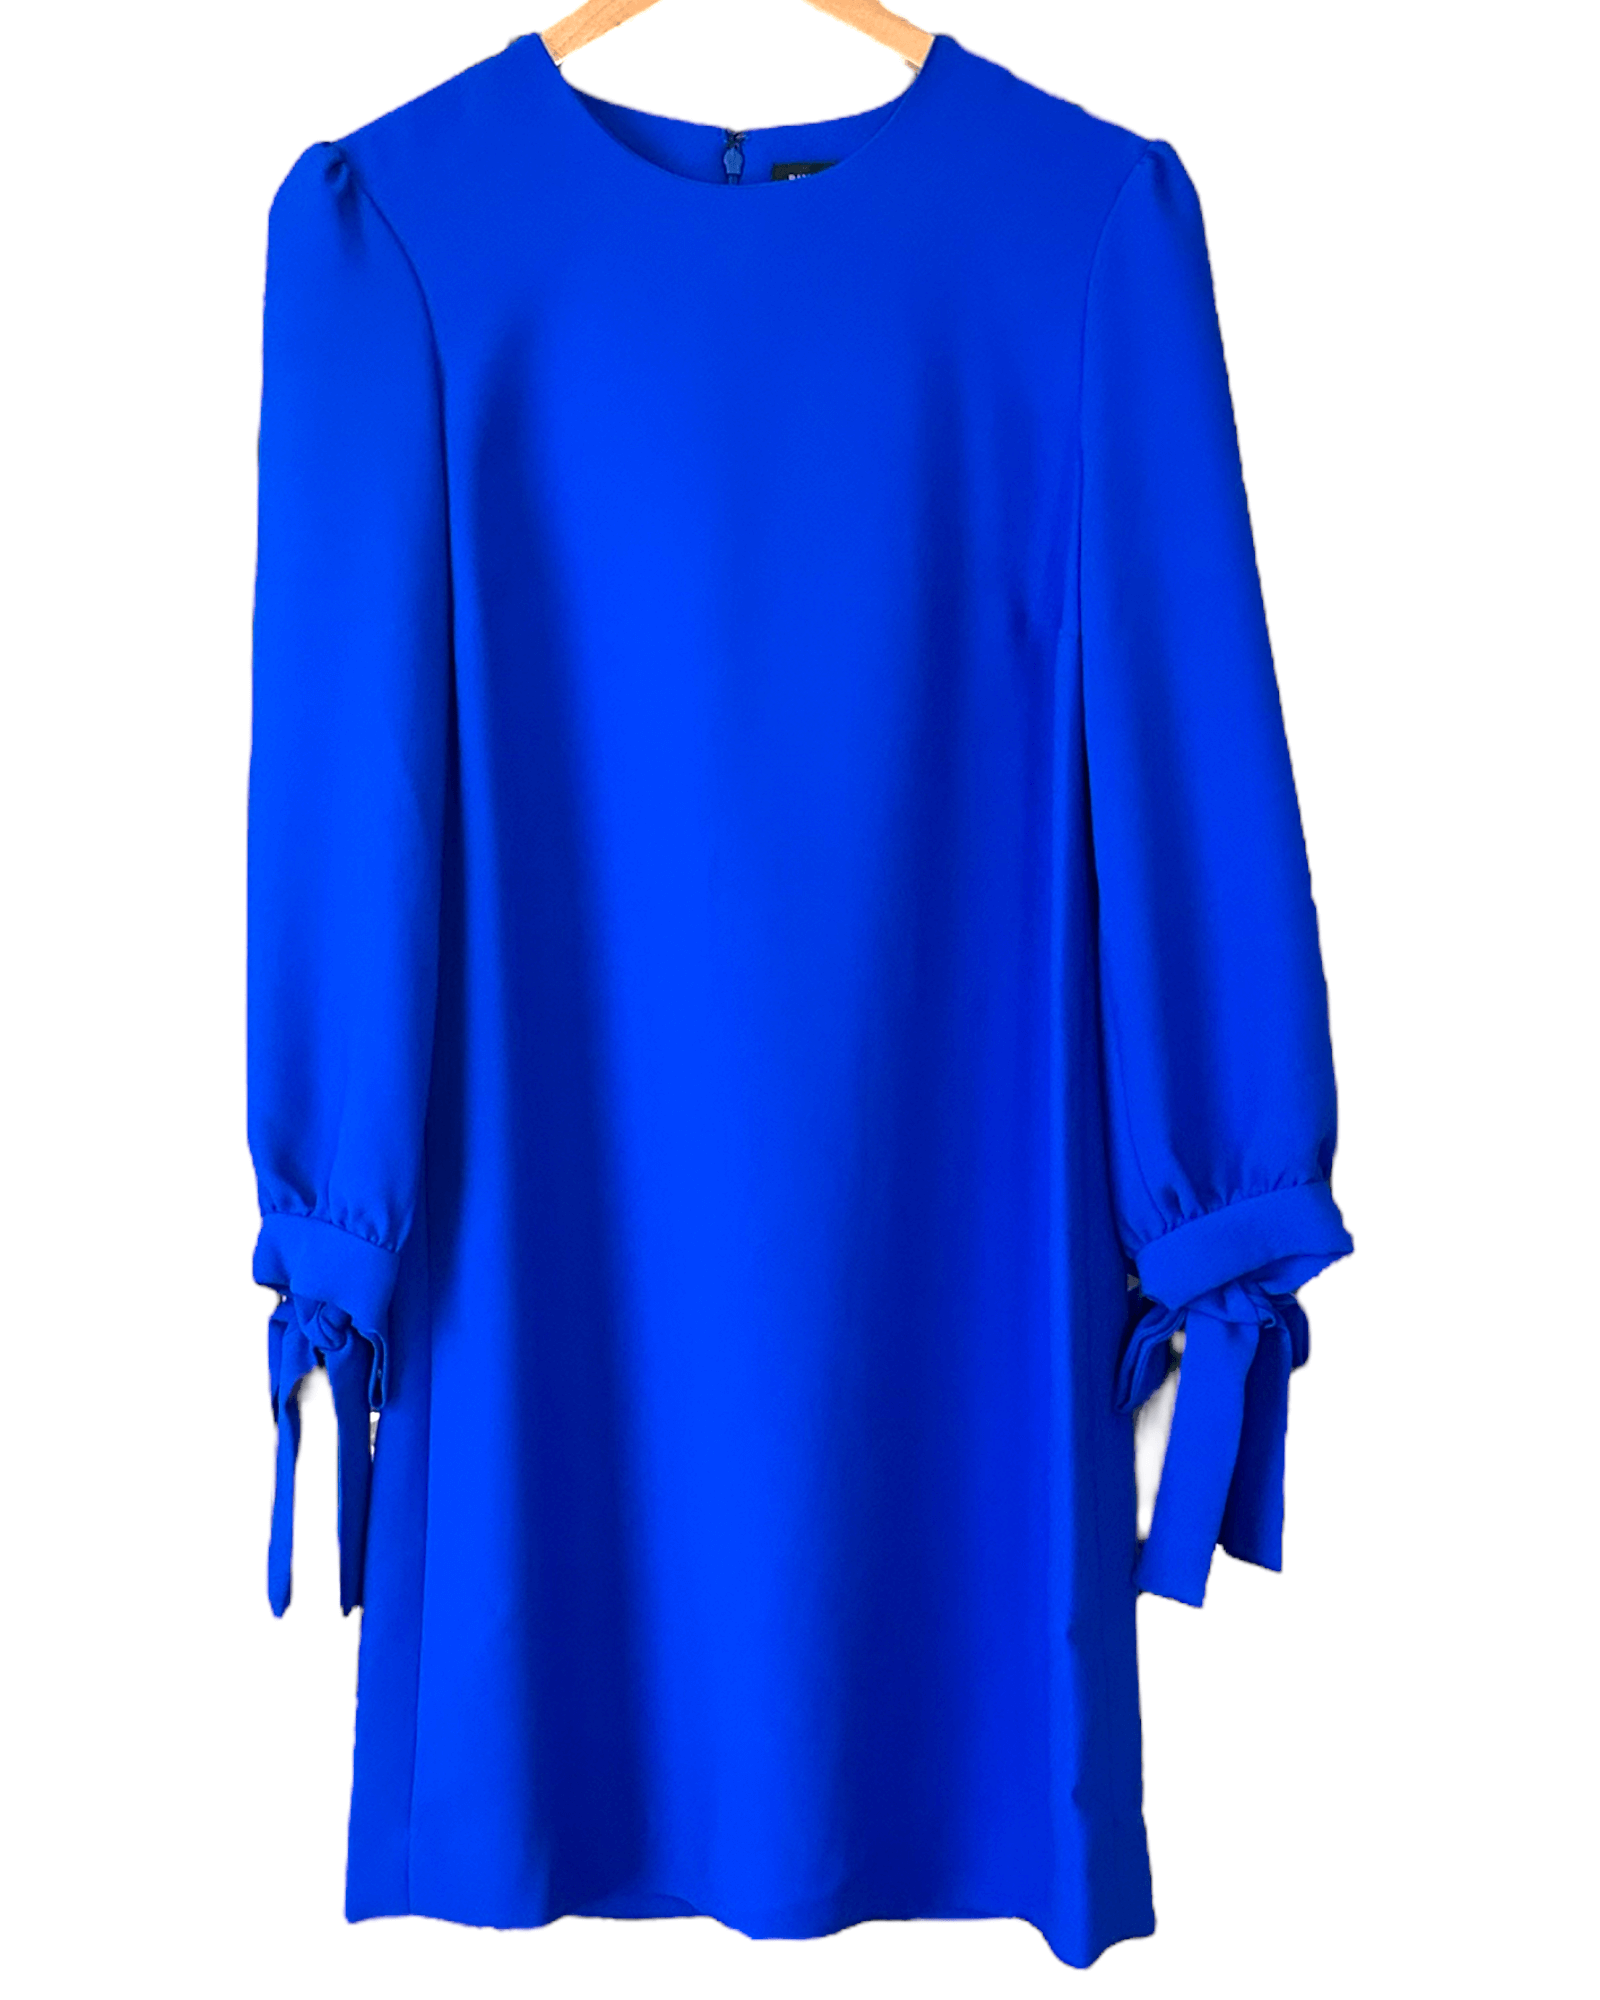 Bright Winter BANANA REPUBLIC electric blue bow cuff dress